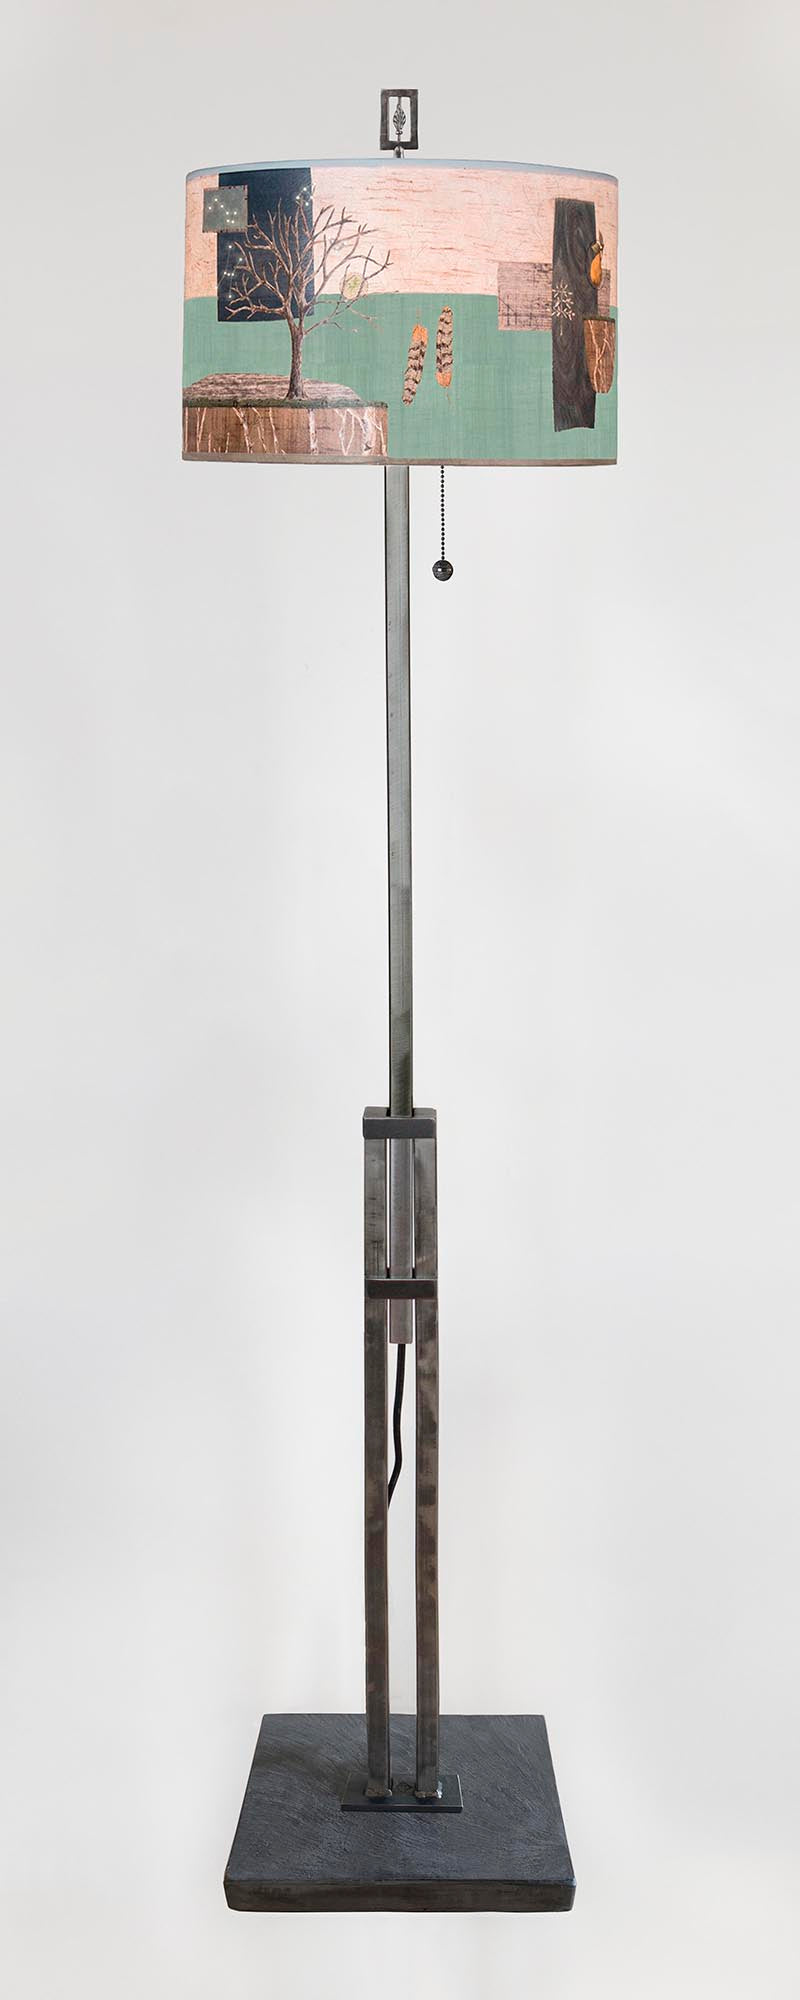 Janna Ugone &amp; Co Floor Lamps Adjustable-Height Steel Floor Lamp with Large Drum Shade in Wander in Field